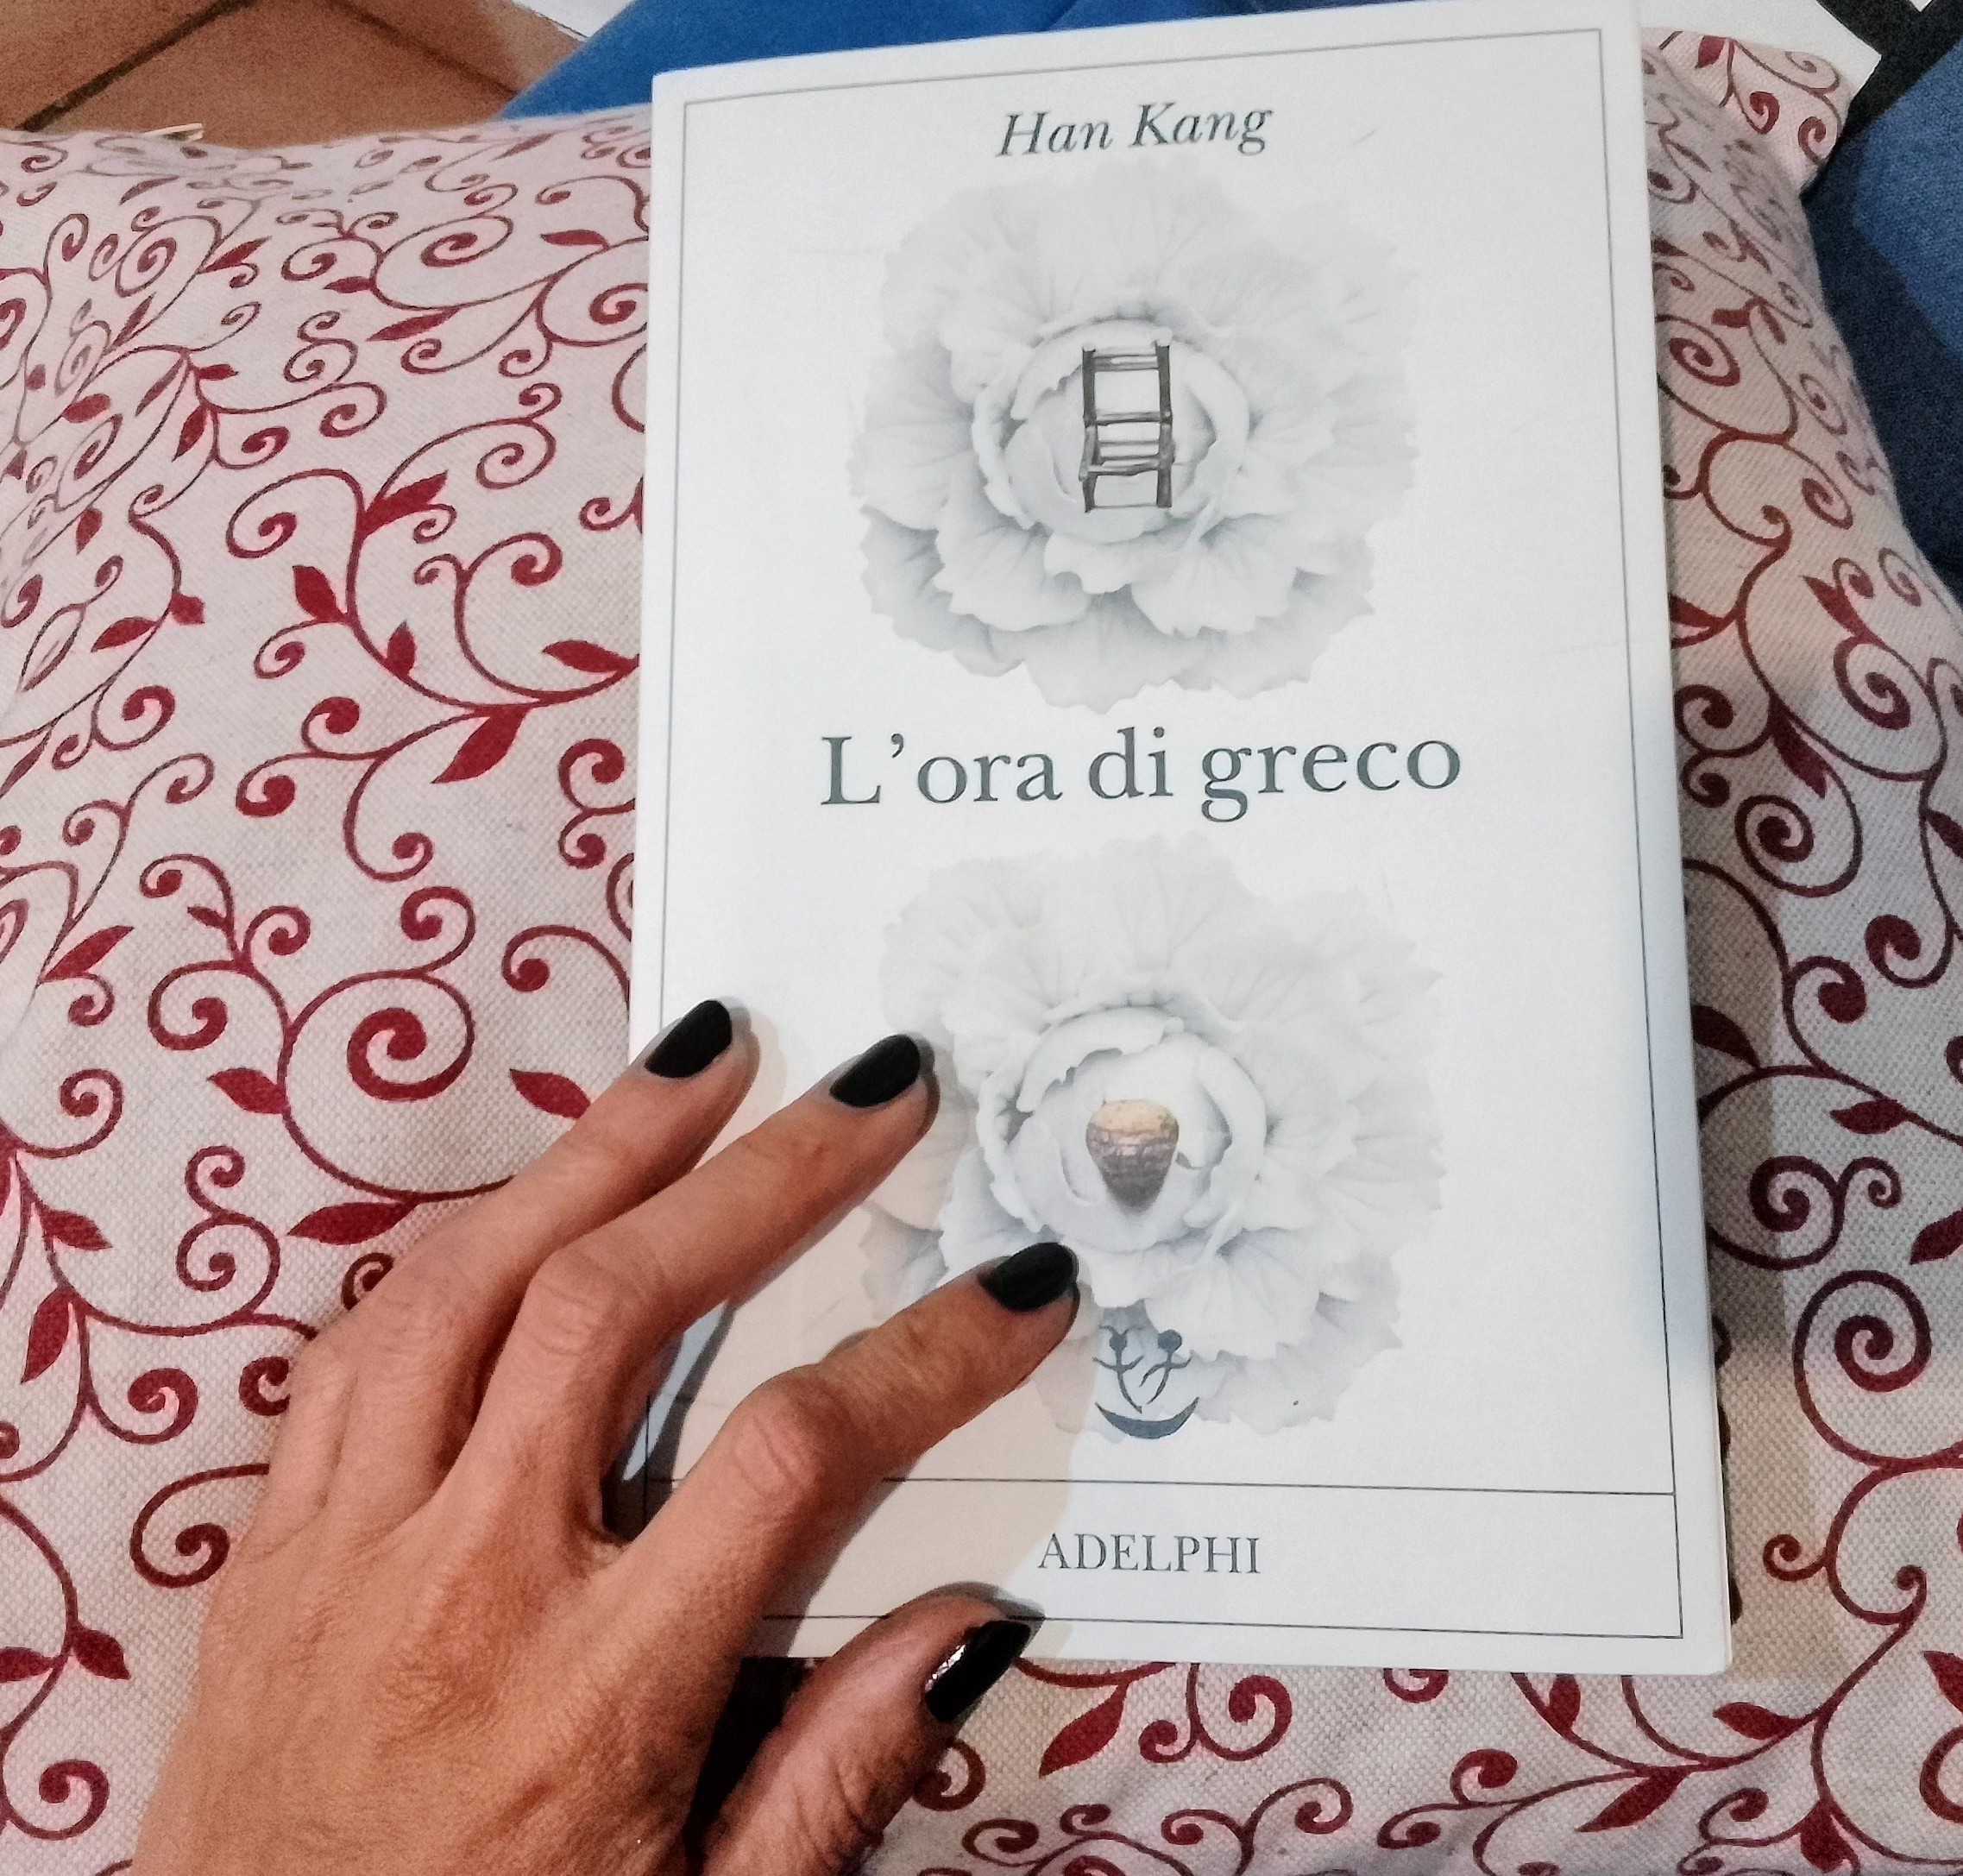 L'ora di greco - Han Kang - Recensione libro